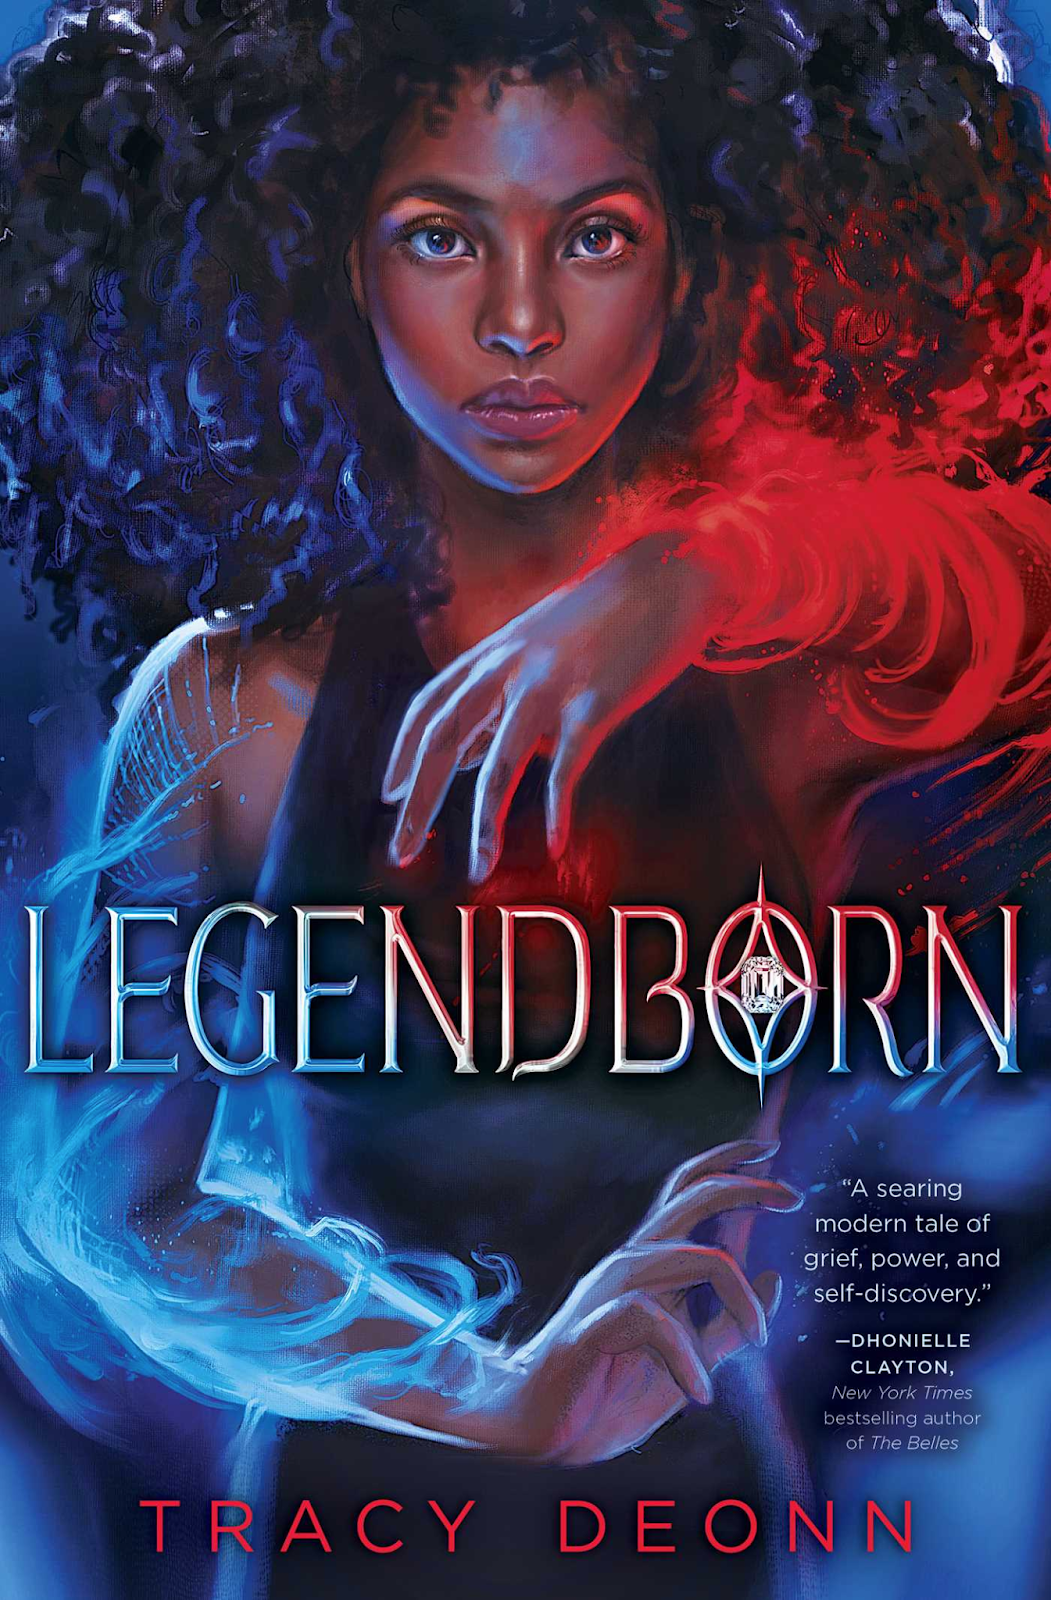 Legendbord, One Of The Best Ya Fantasy Romance Books